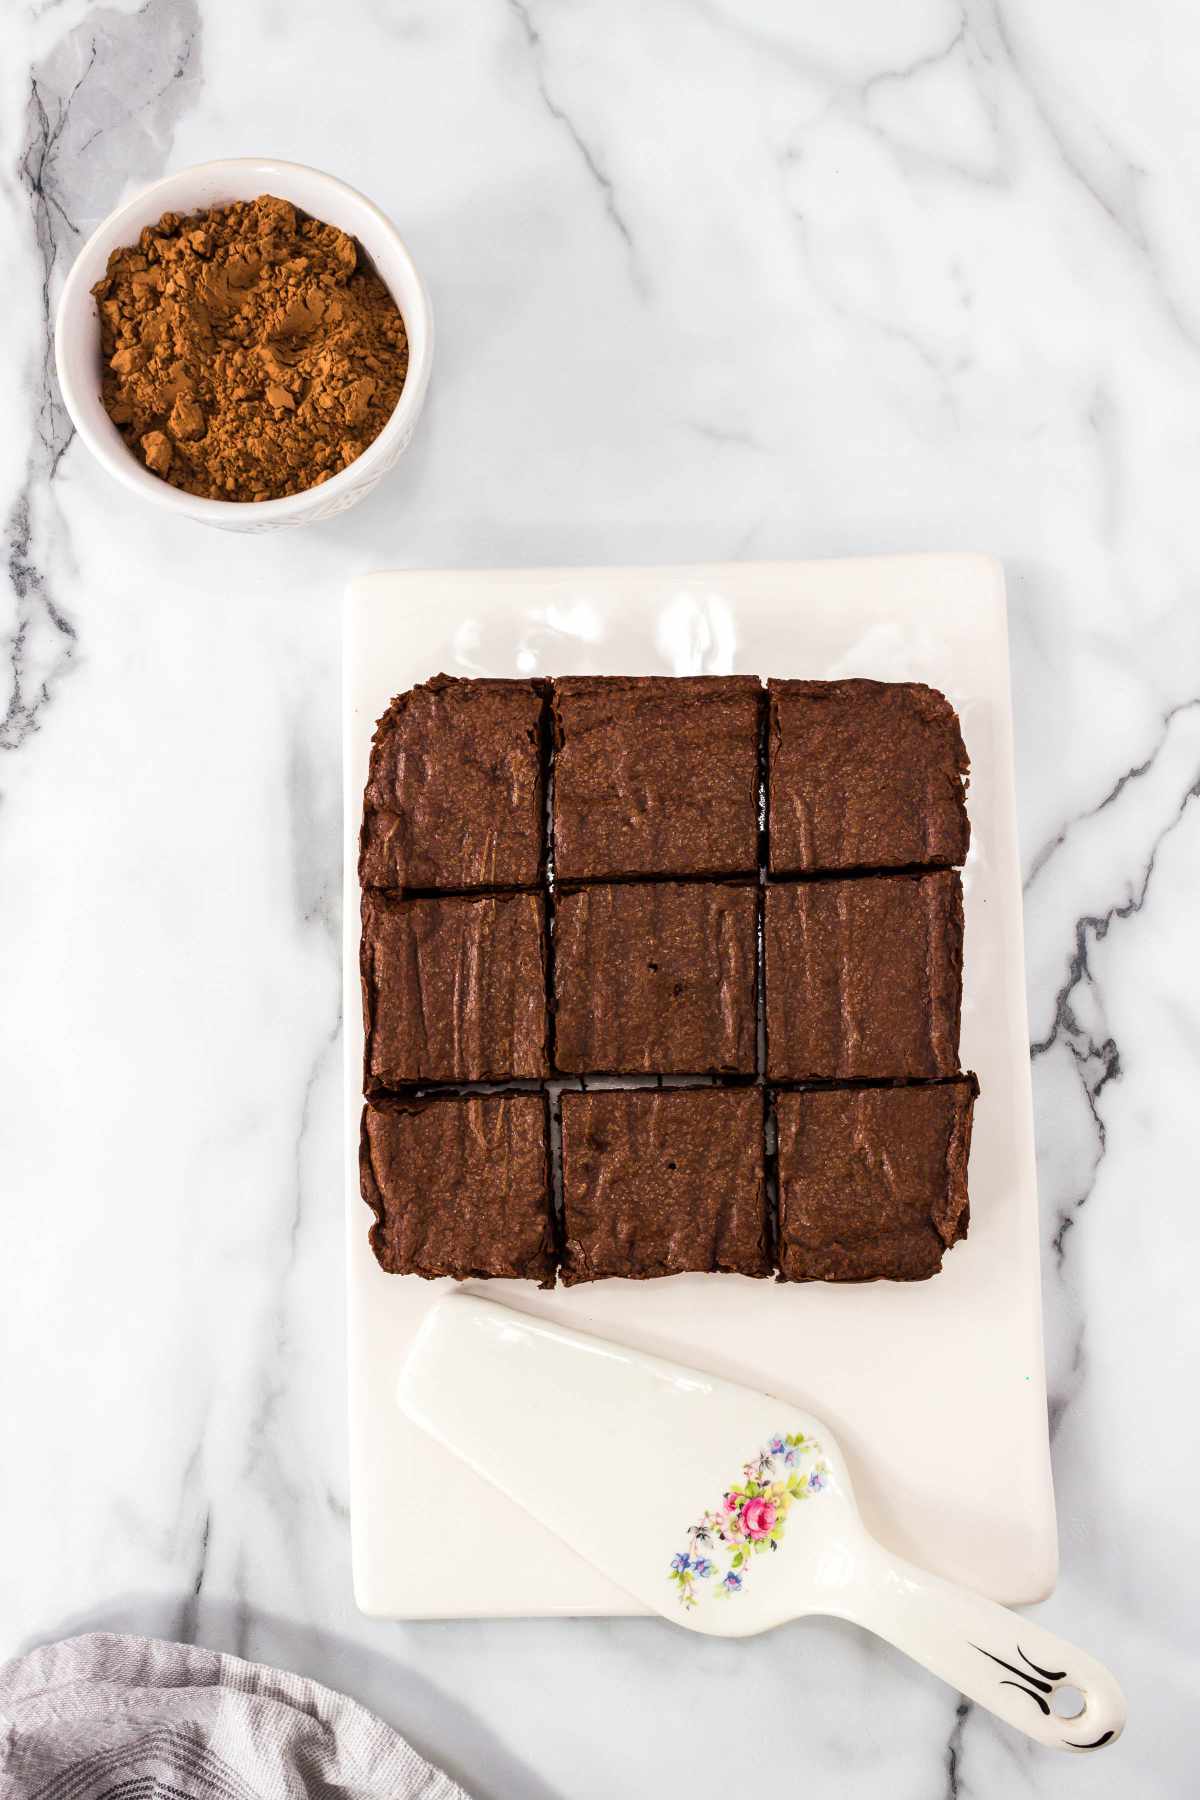 cooled slab of brownies cut into nine bars.